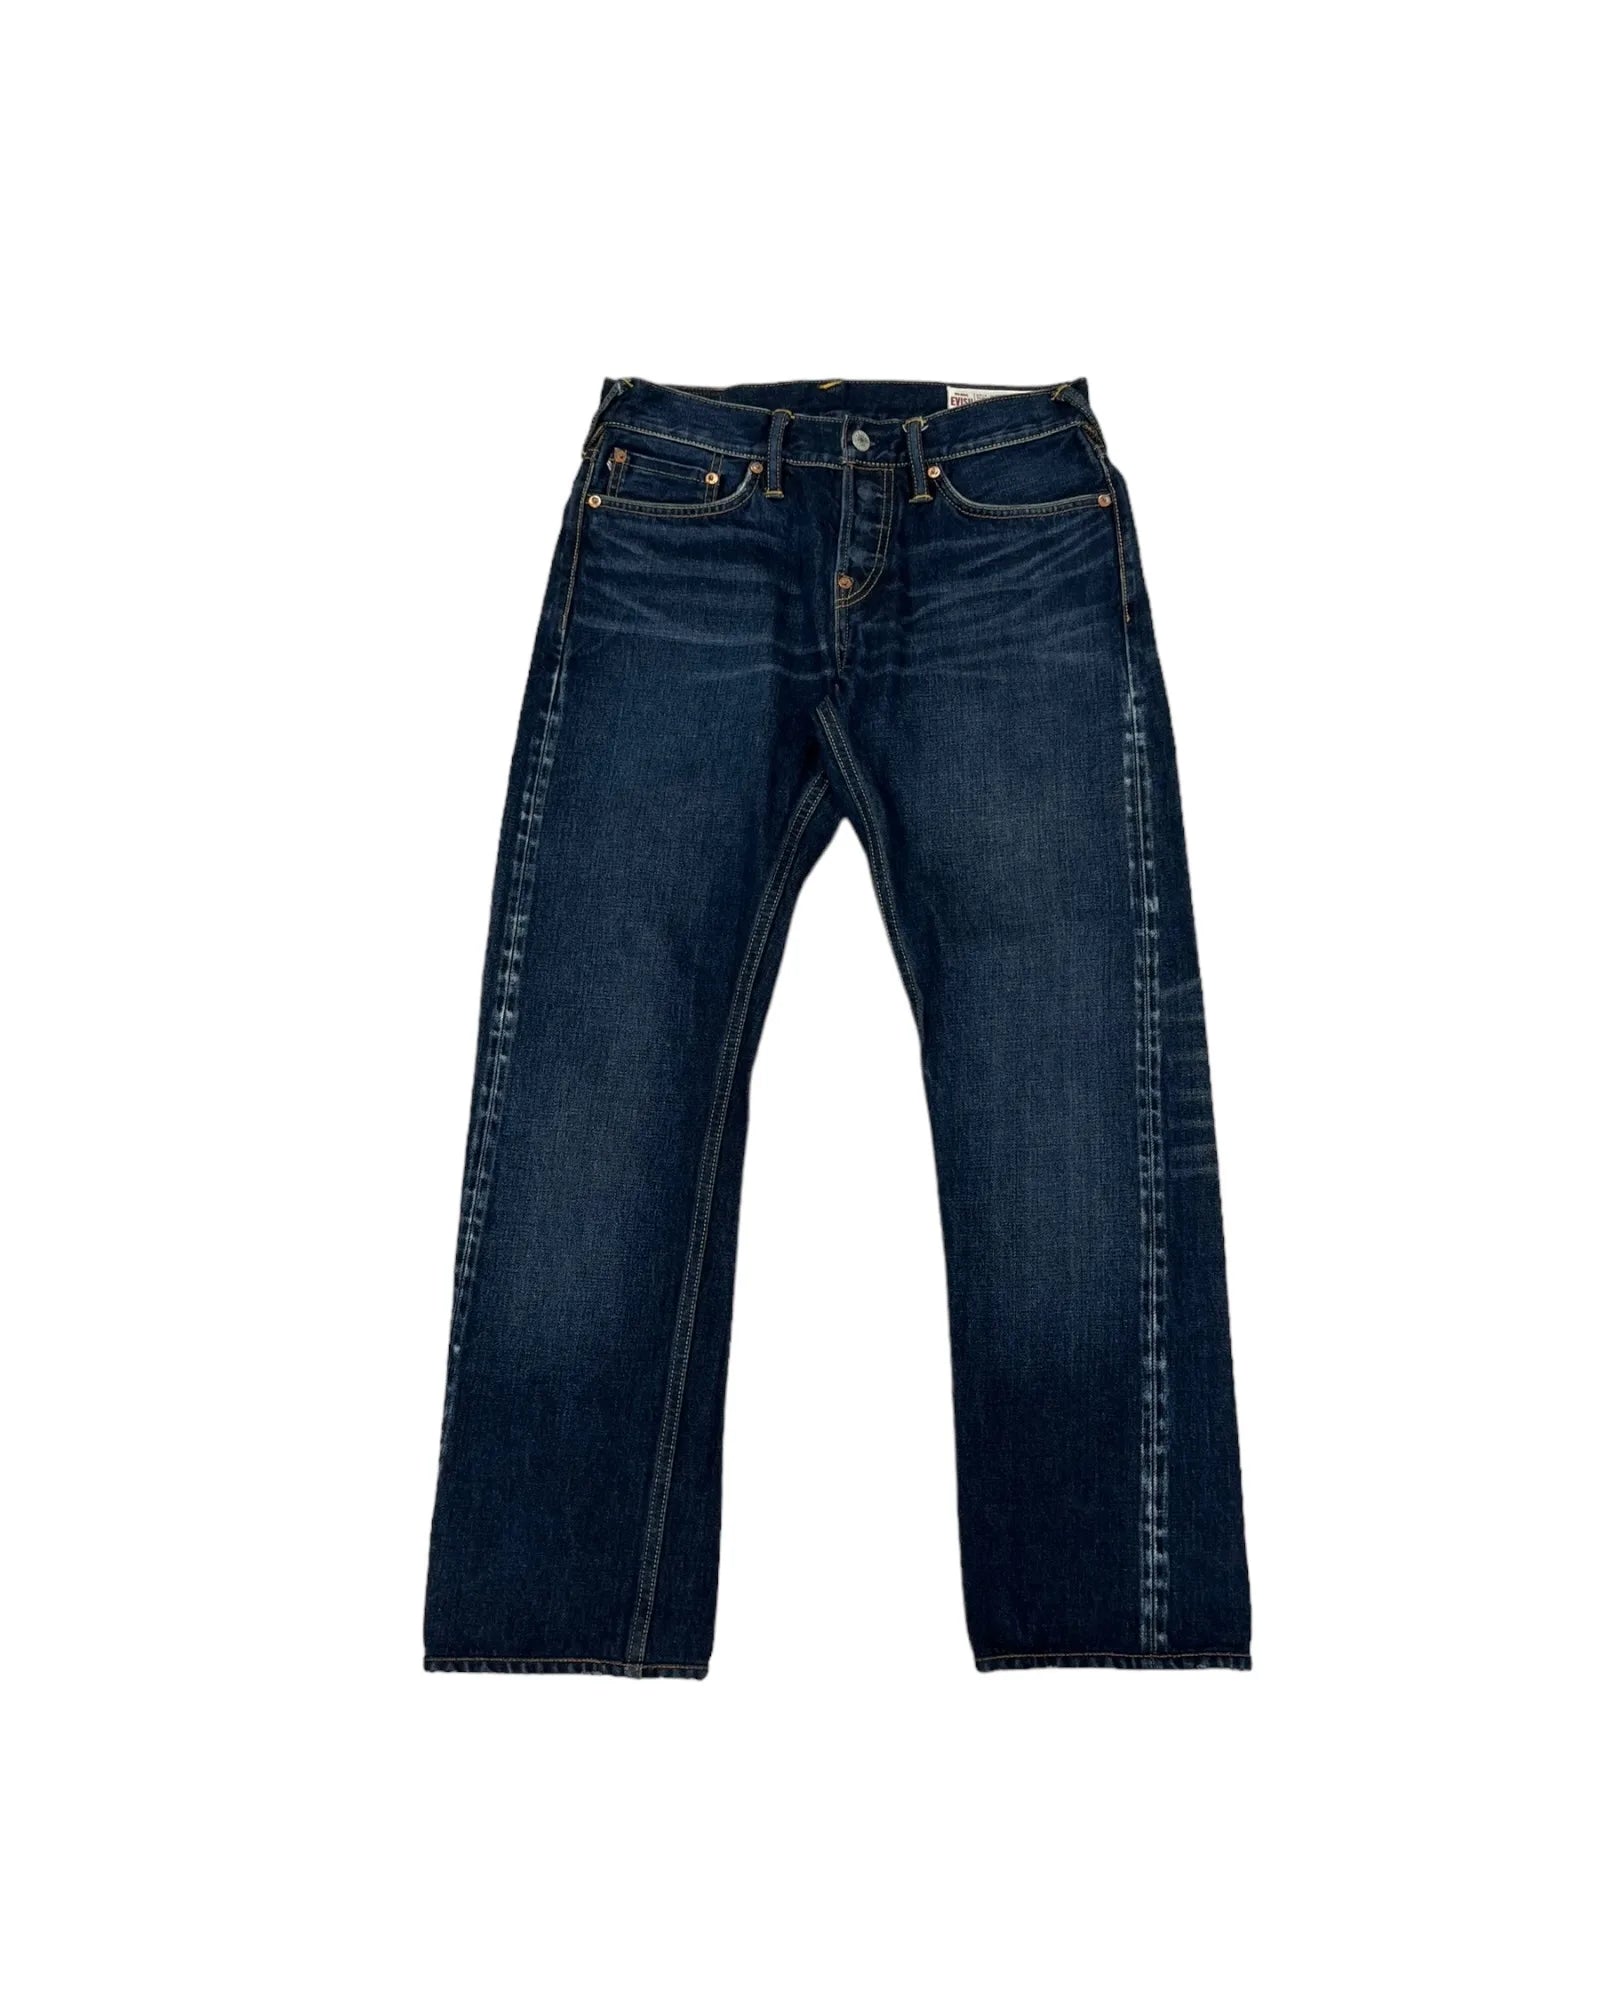 Evisu Jeans - 29W34L 